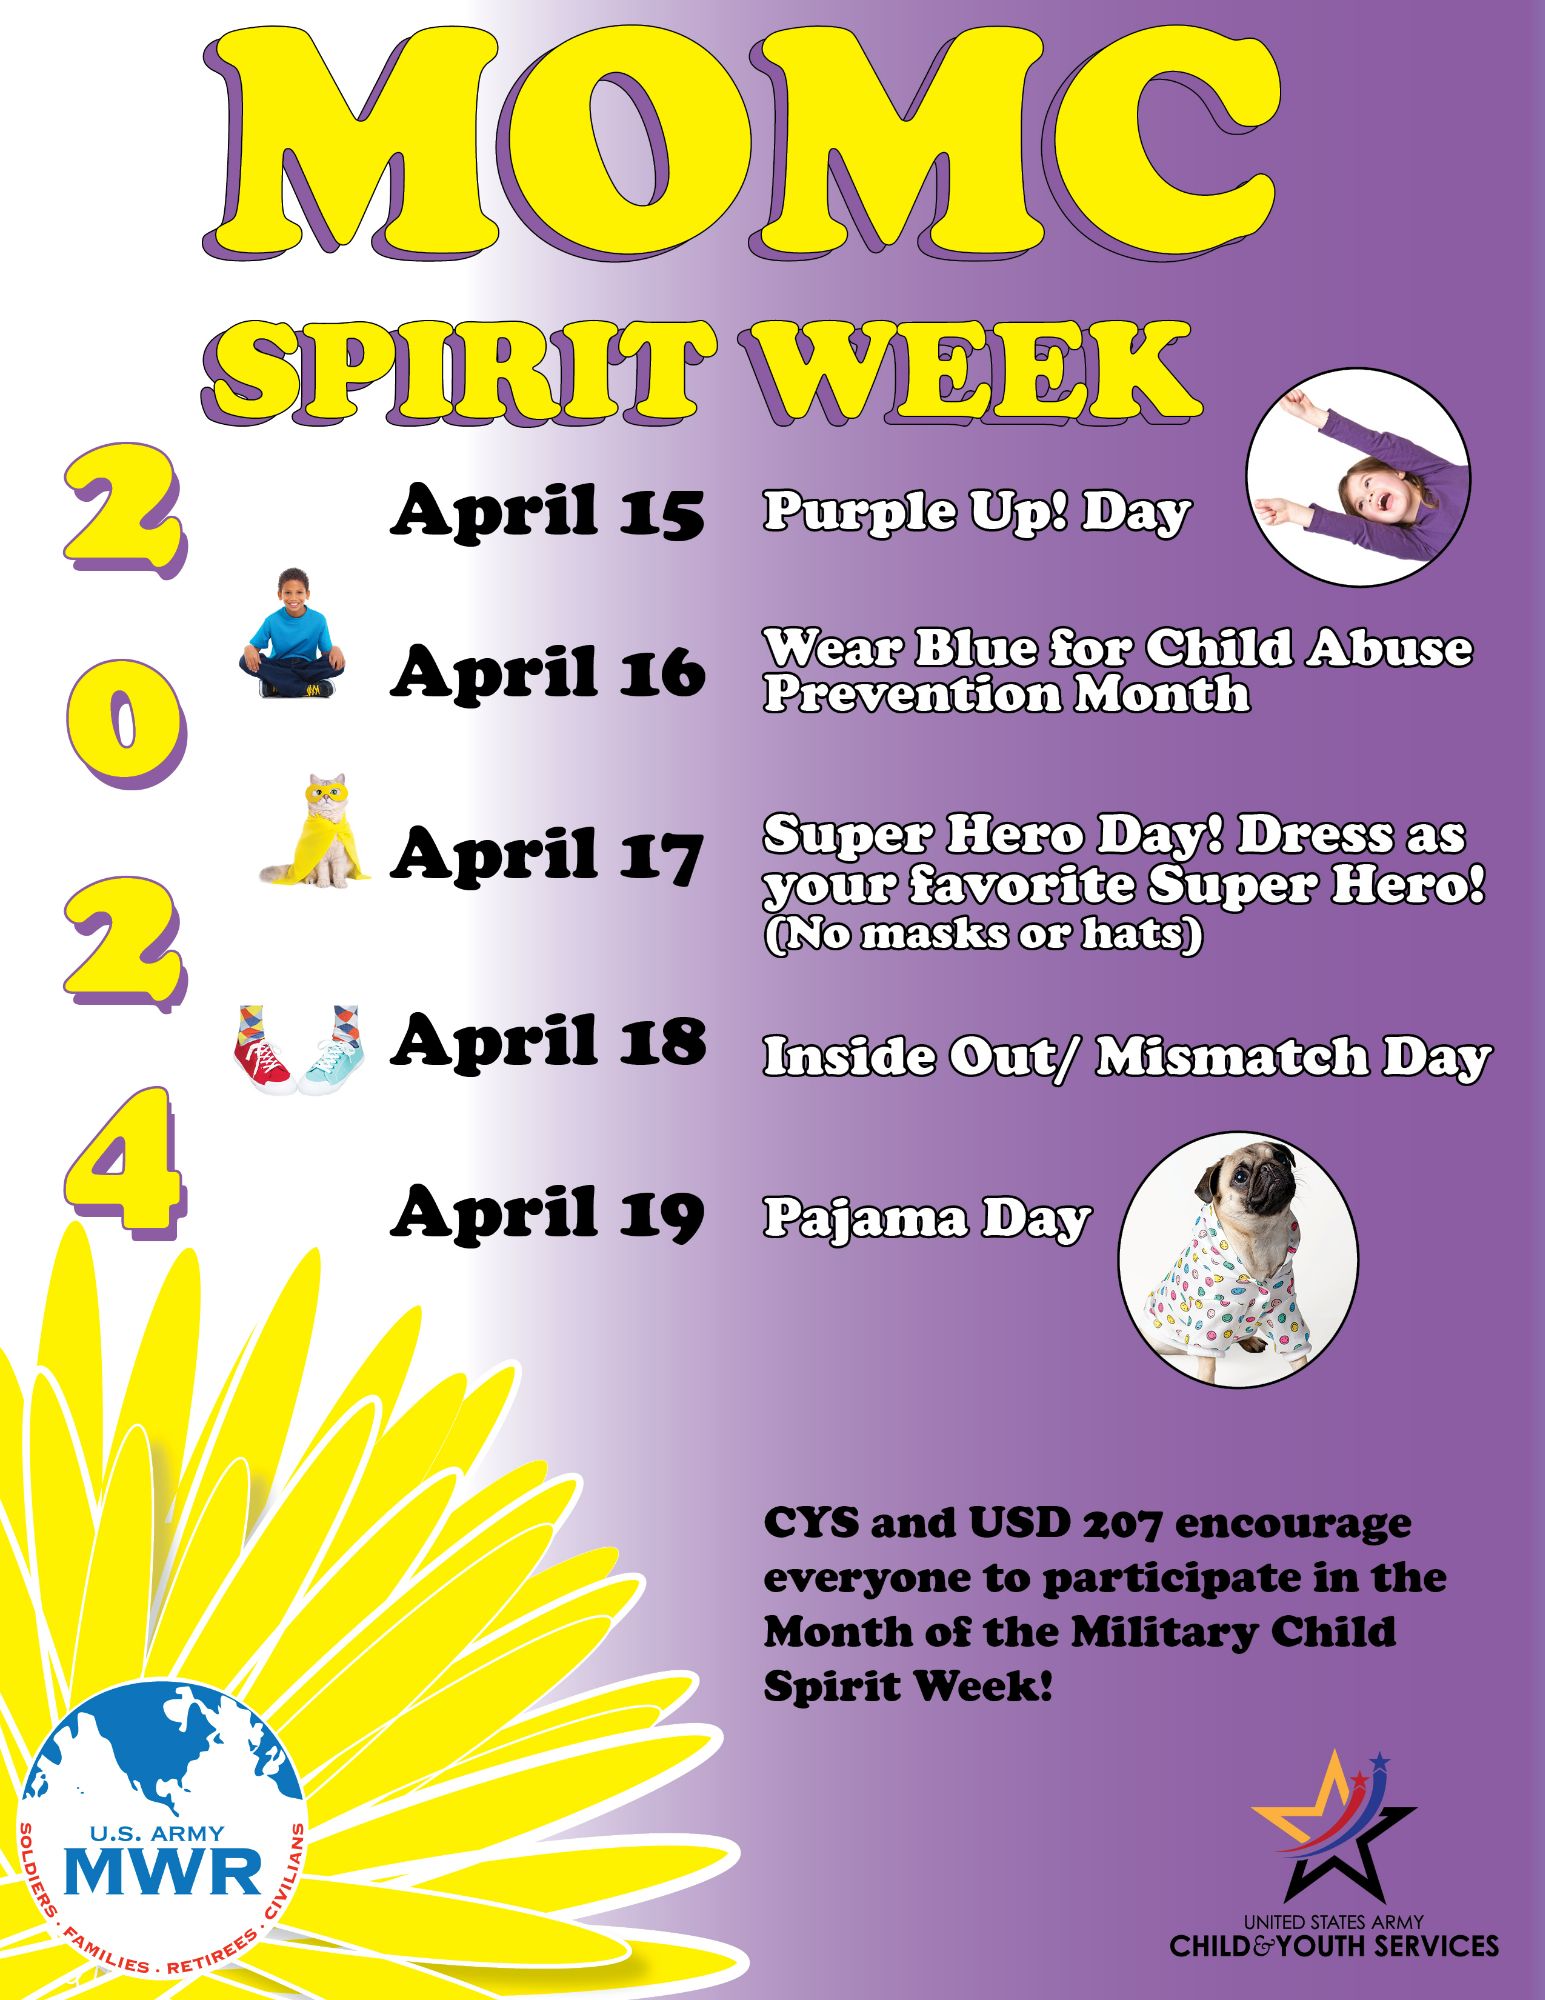 MOMC Spirit Week 24.jpg